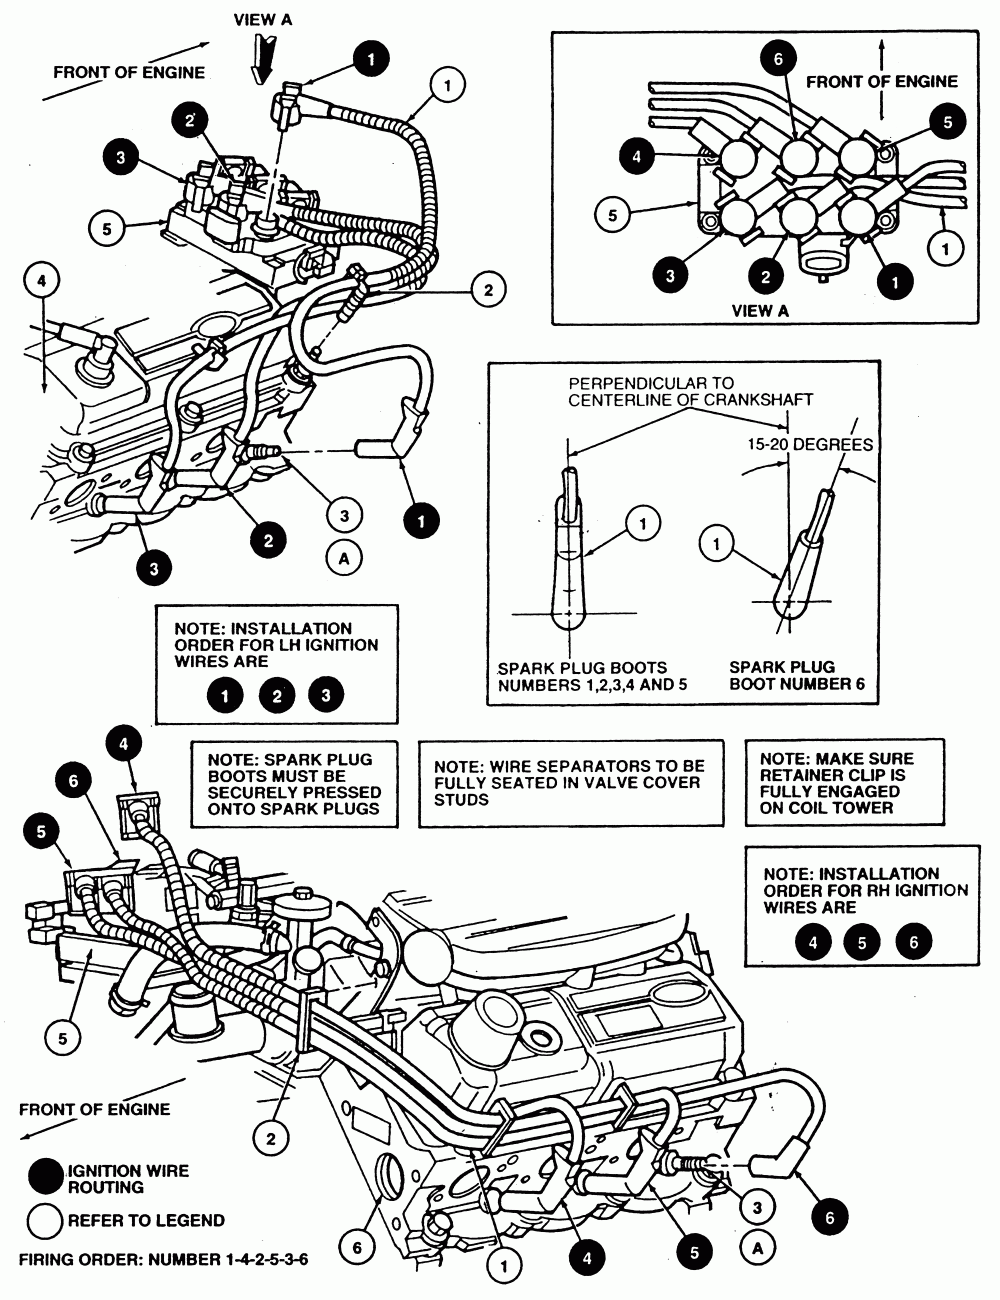 2005 Ford Freestar Spark Plug Wire Diagram | Bege Wiring Diagram